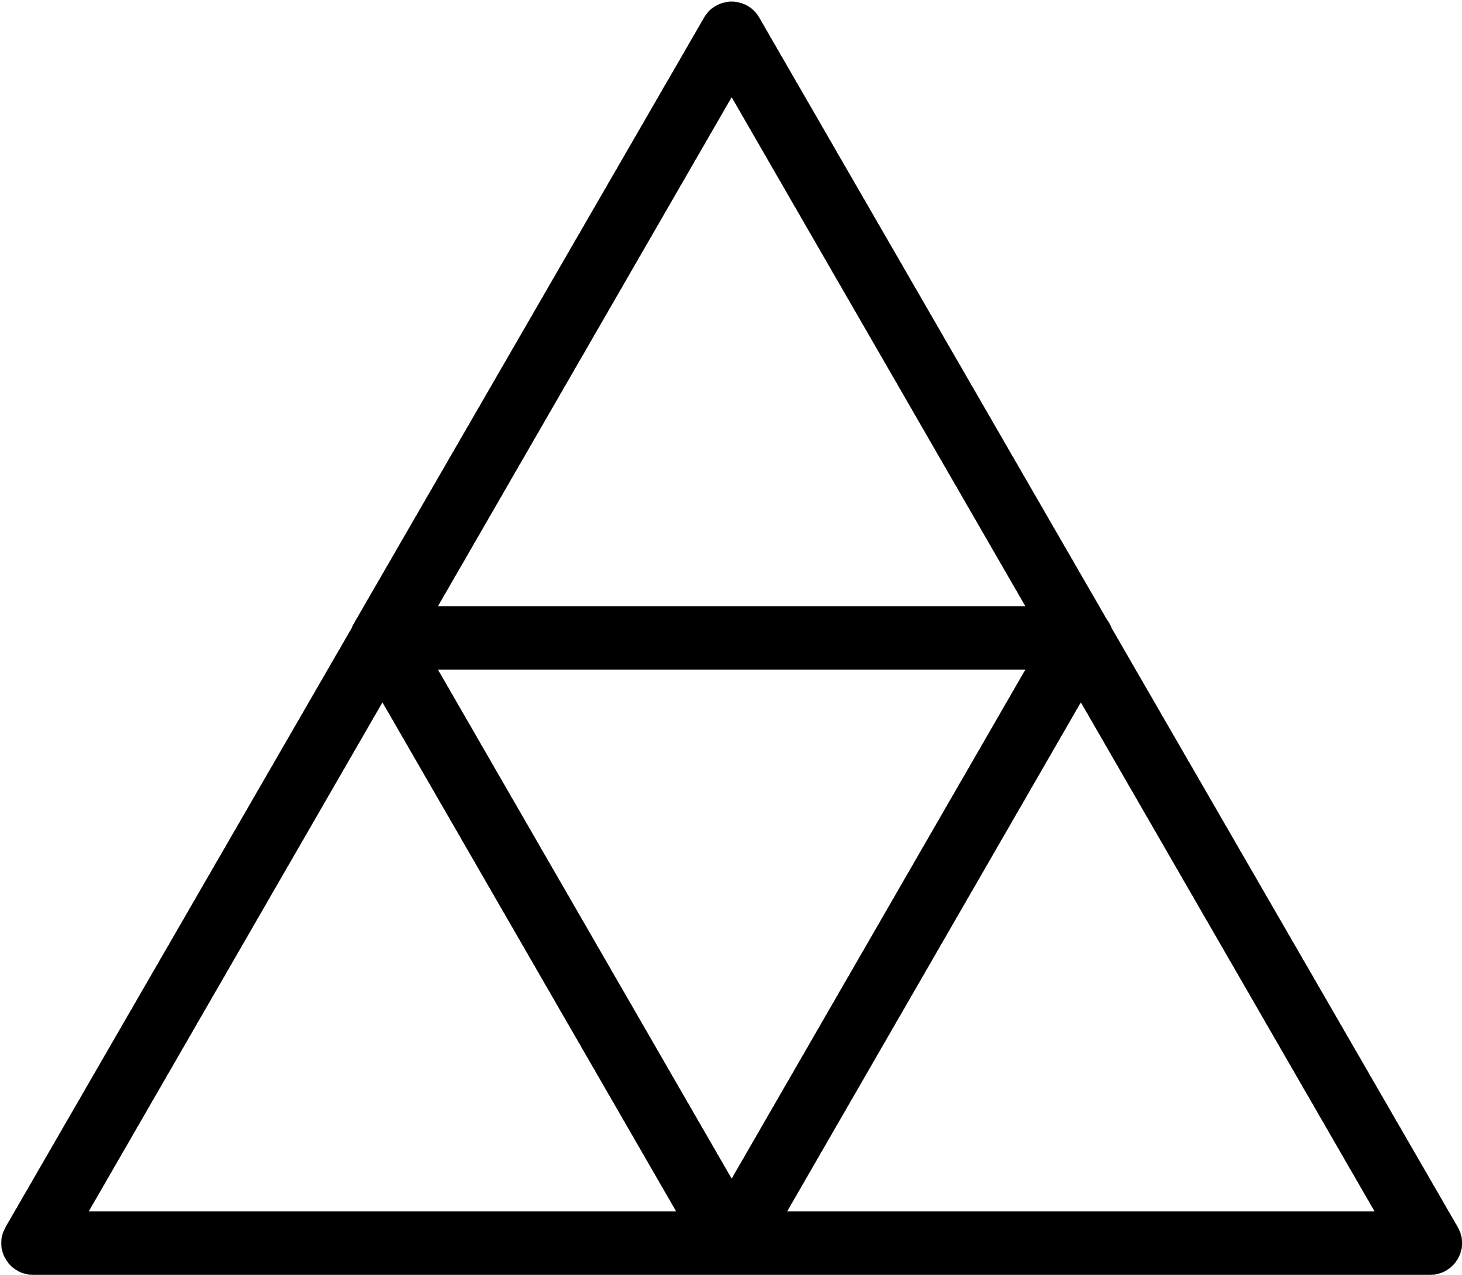 Smiley Clipart Triangle - Ecole Des Ponts Business School Logo (1600x1600)